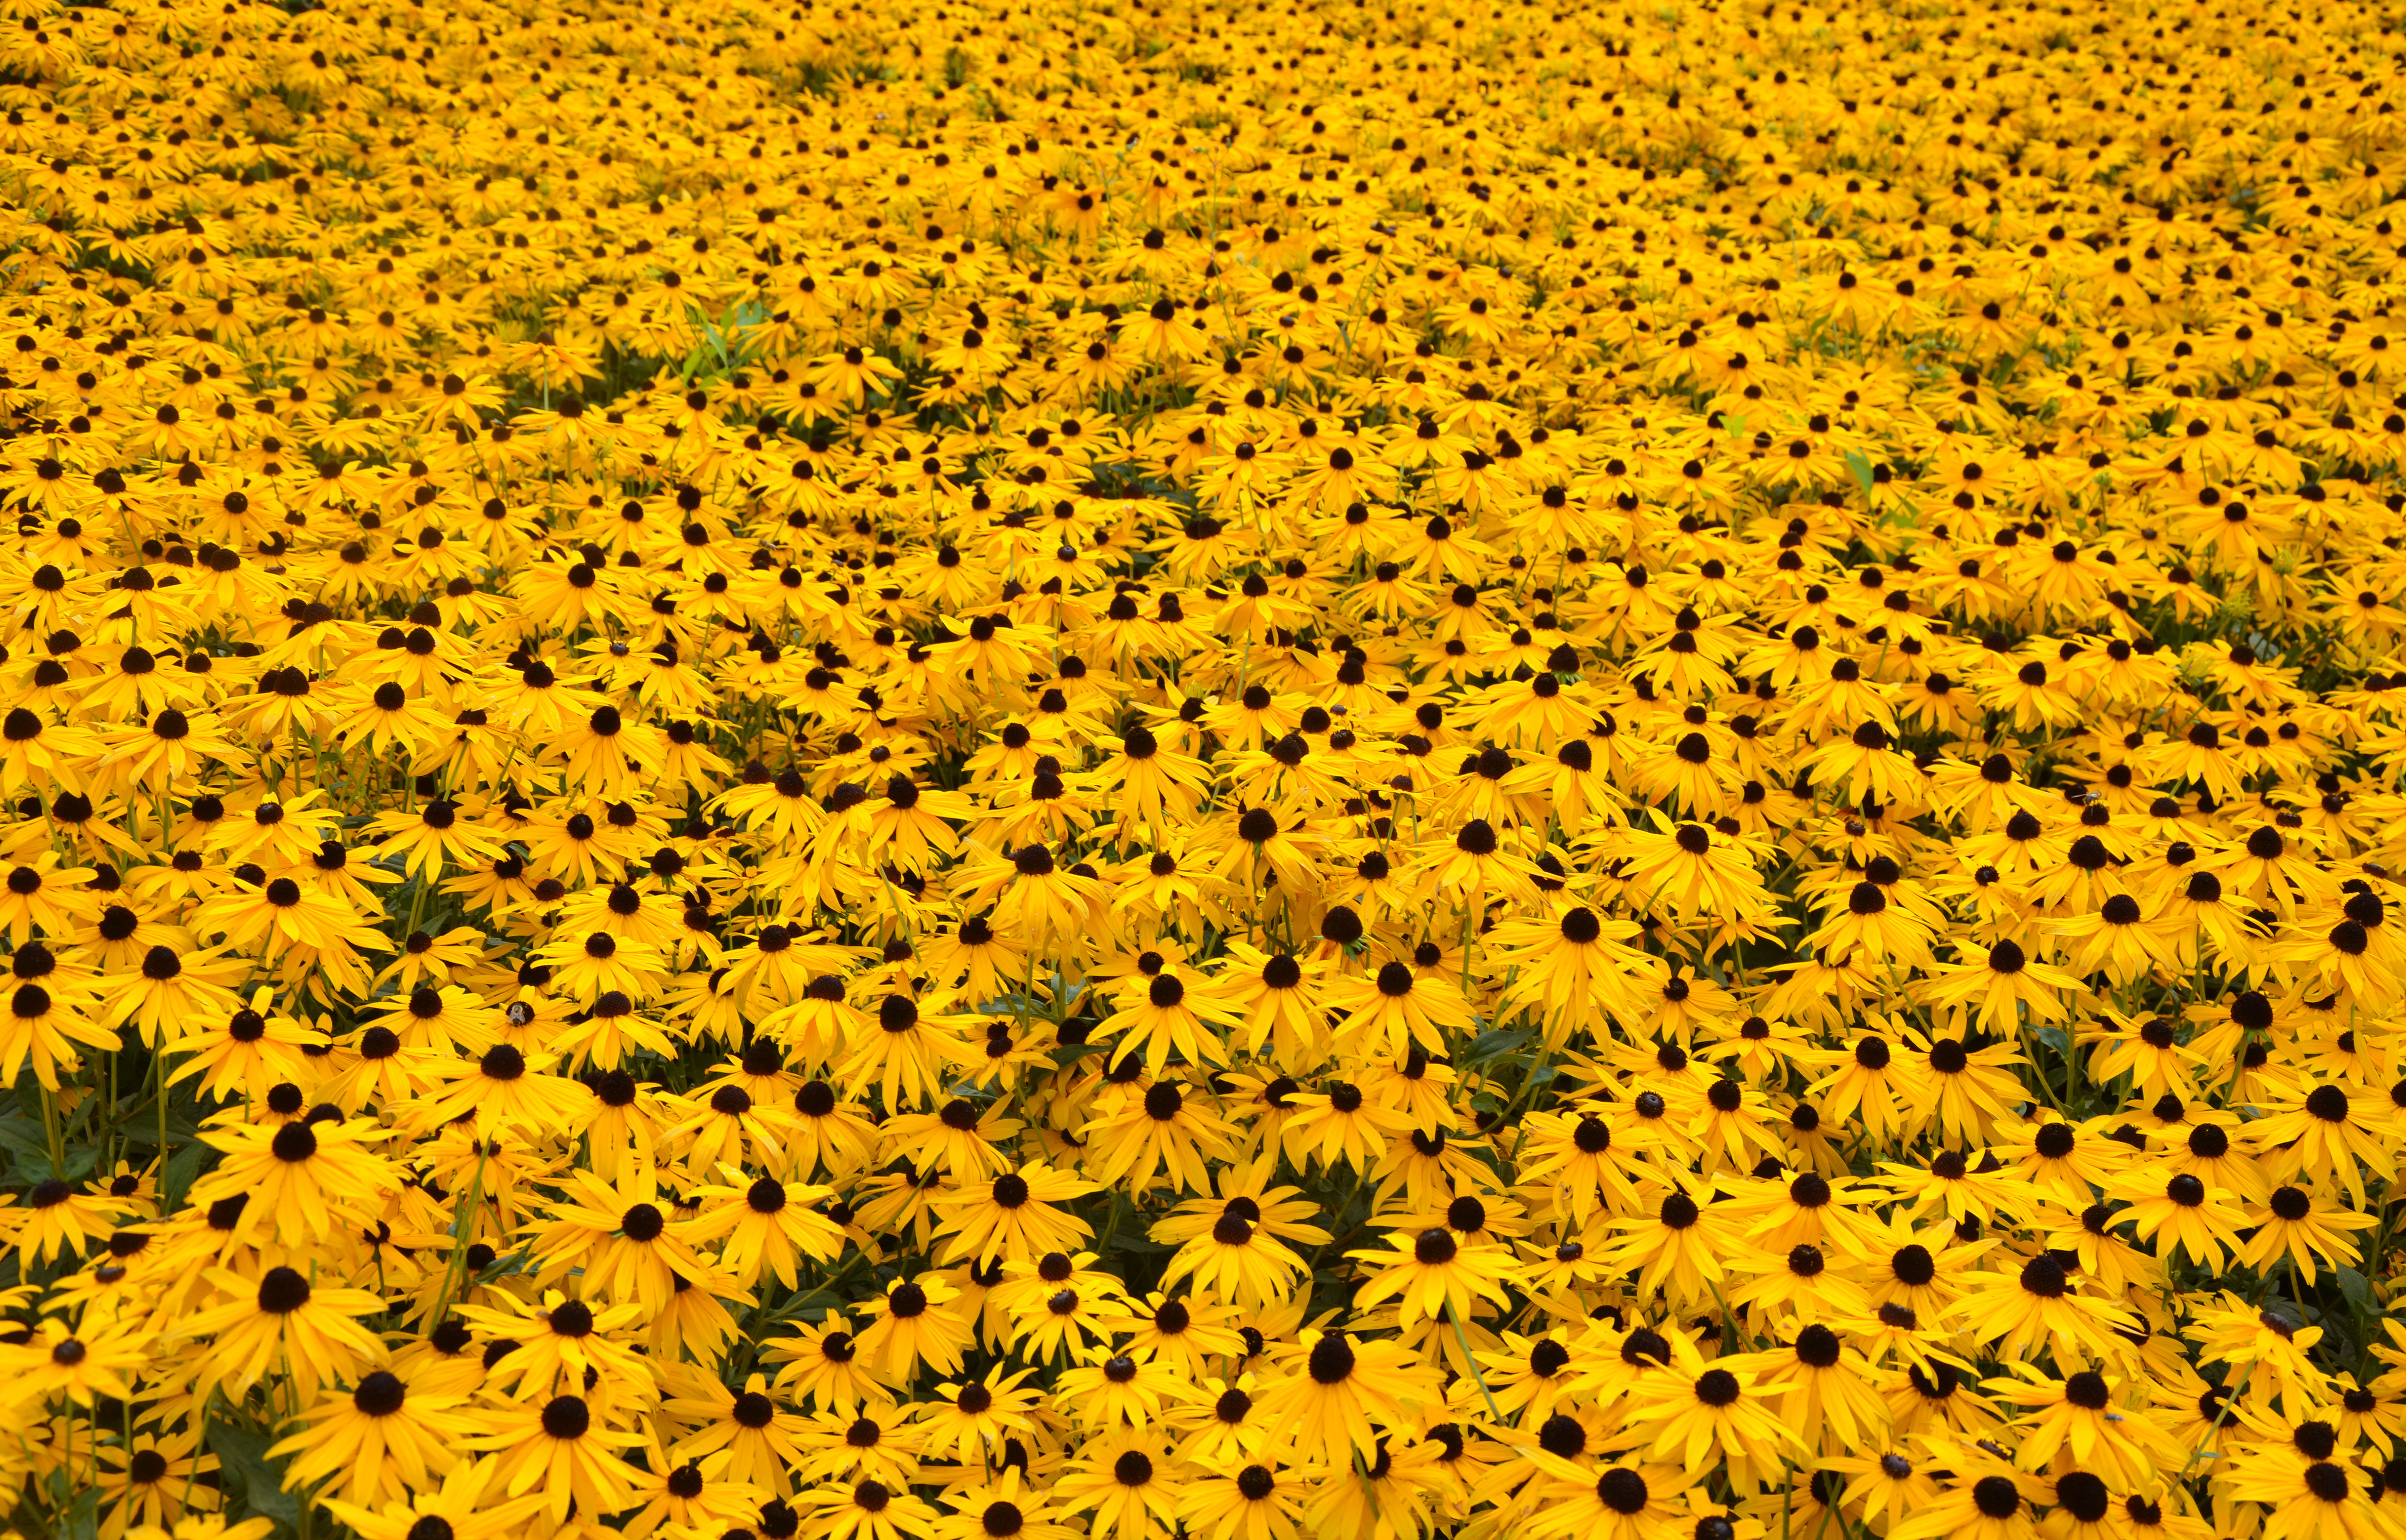 File:Field of yellow flowers (6080049195).jpg - Wikimedia Commons